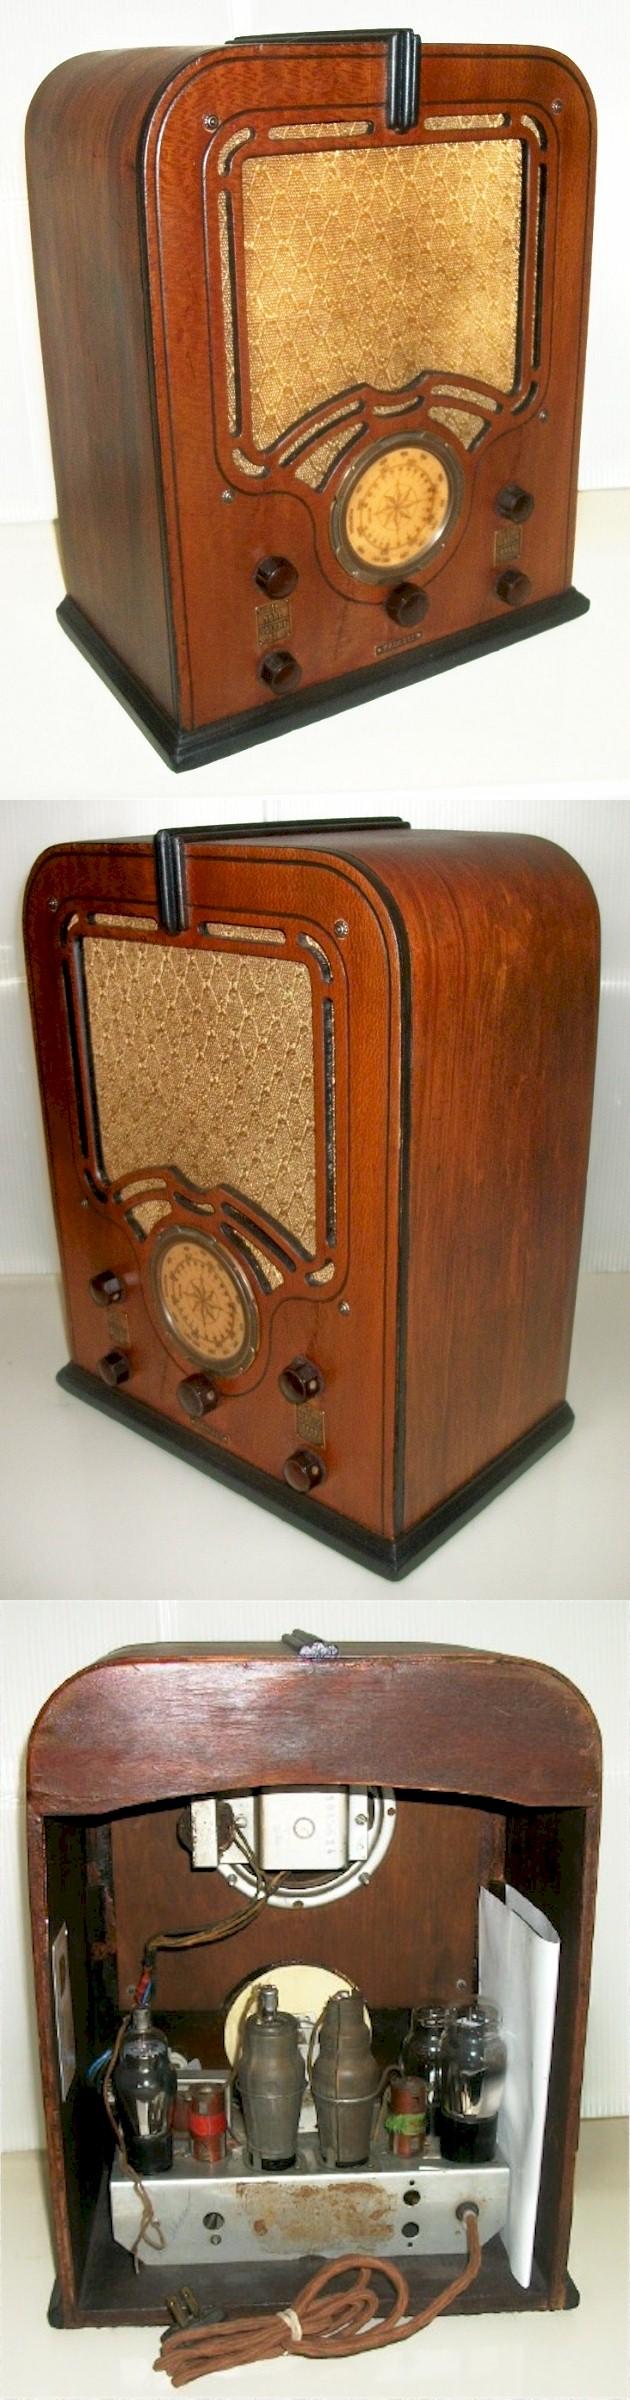 Kadette/International 65 AM/Shortwave (1930s)